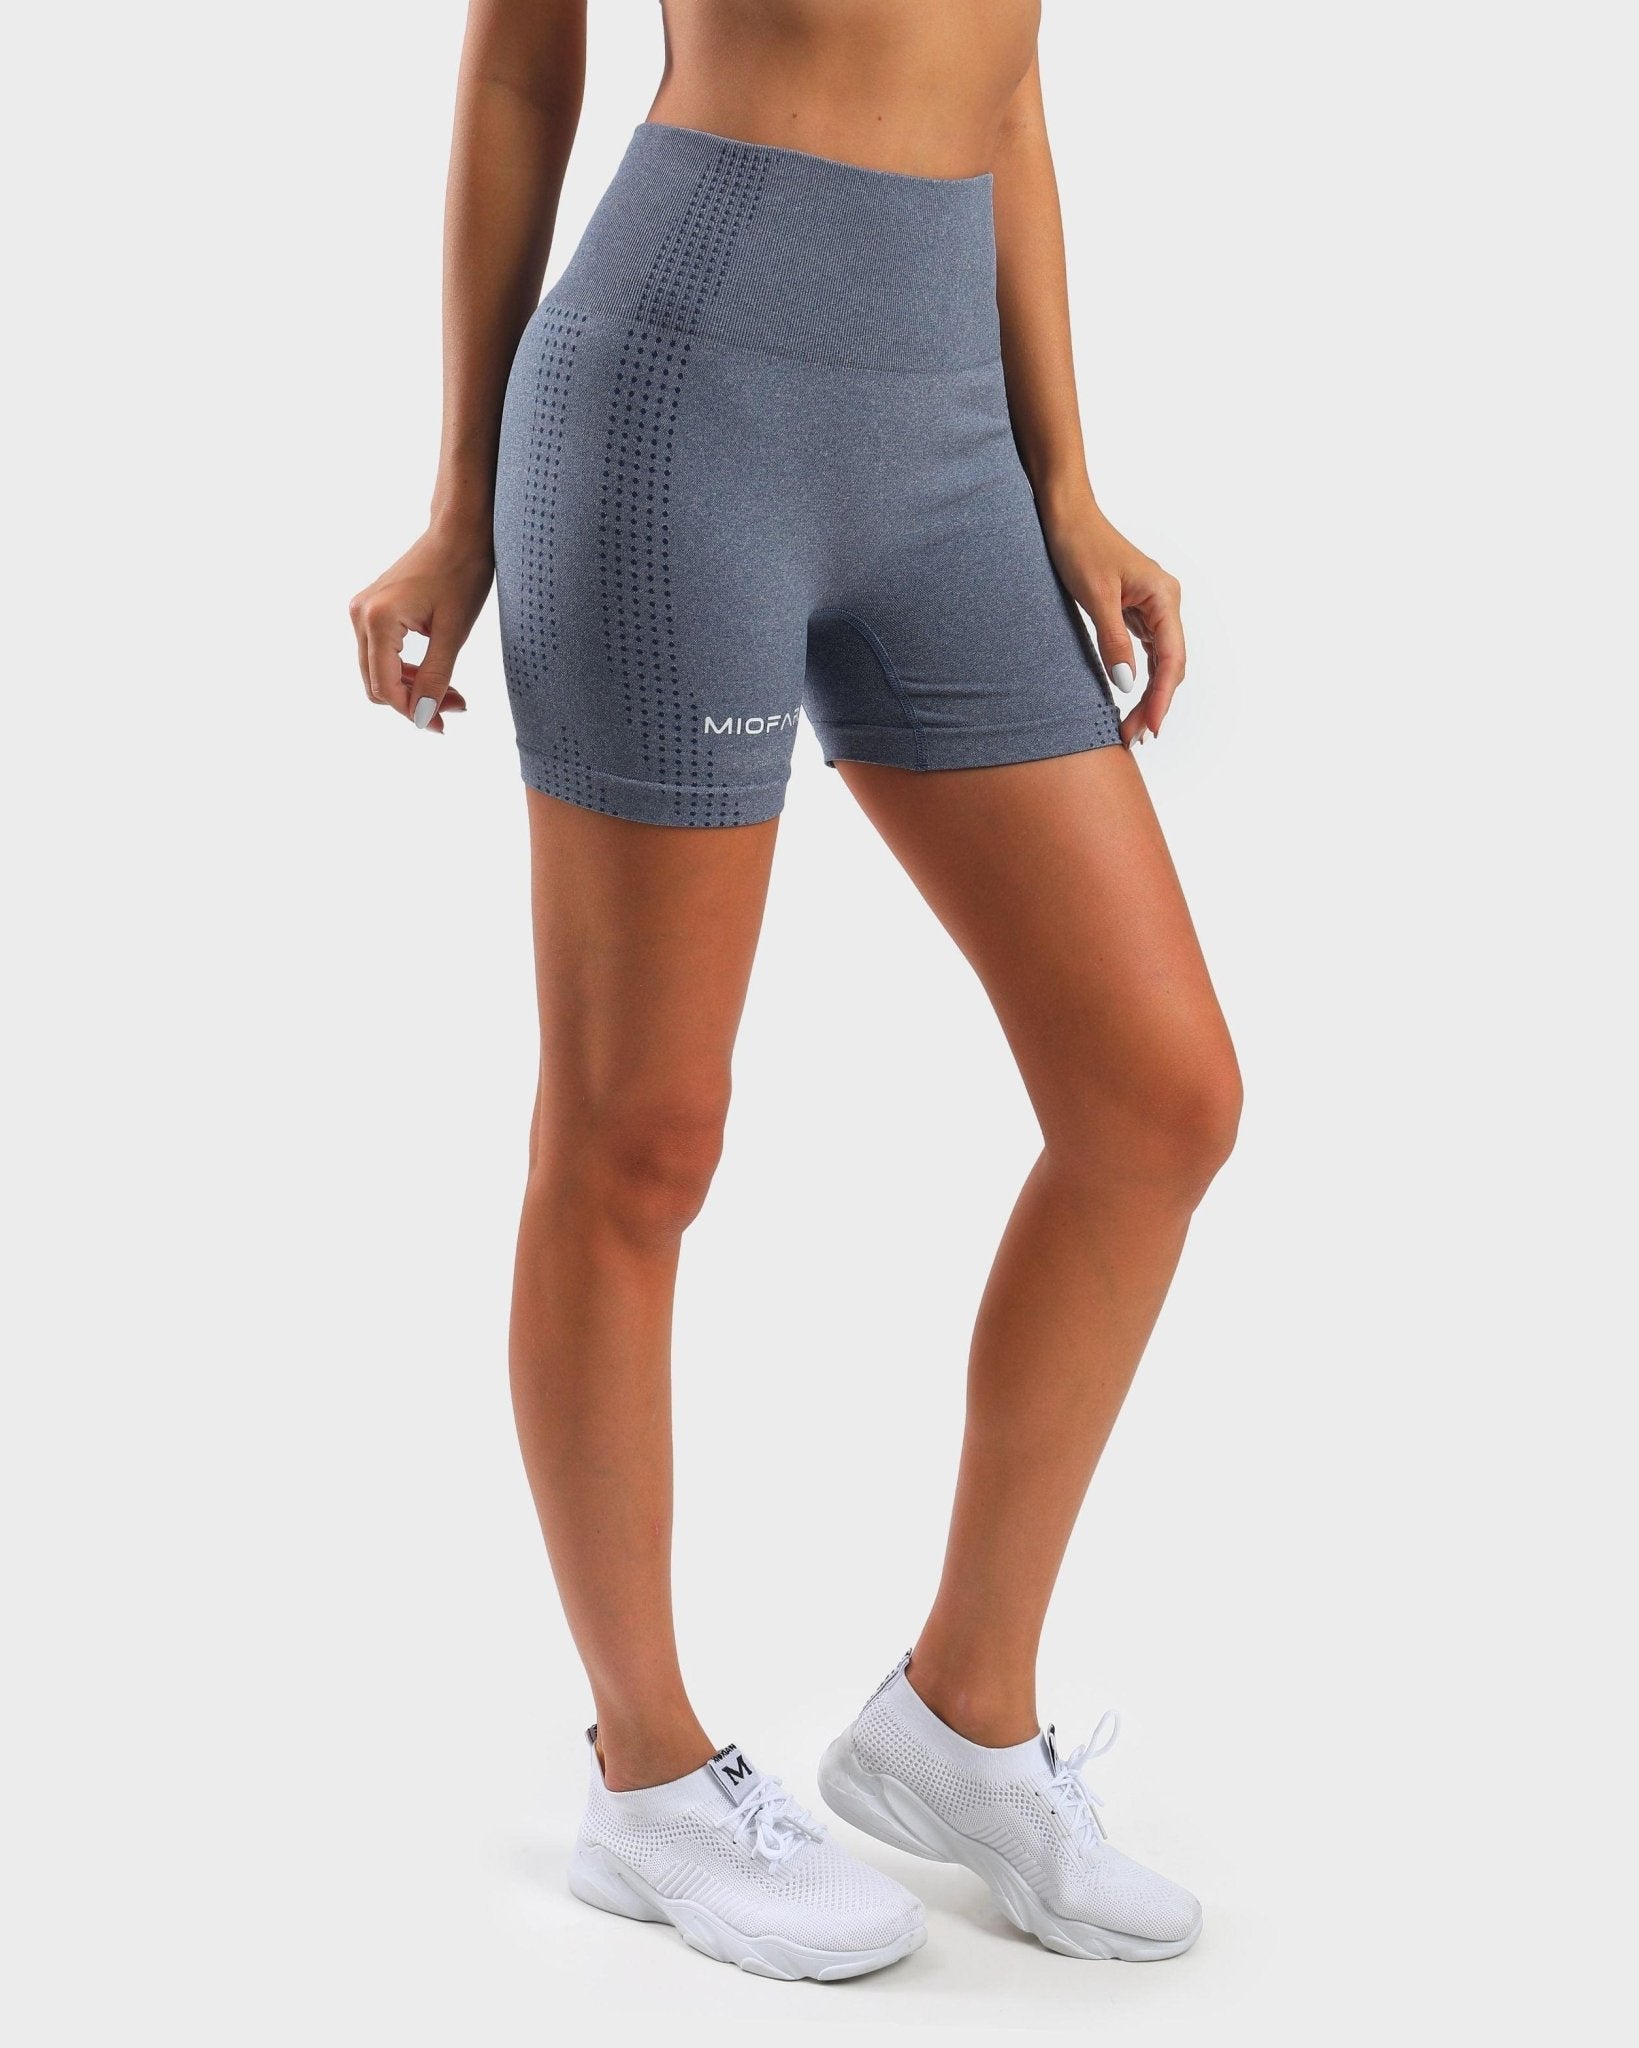 Seamless Flex Performance Blue Shorts - MIOFAR